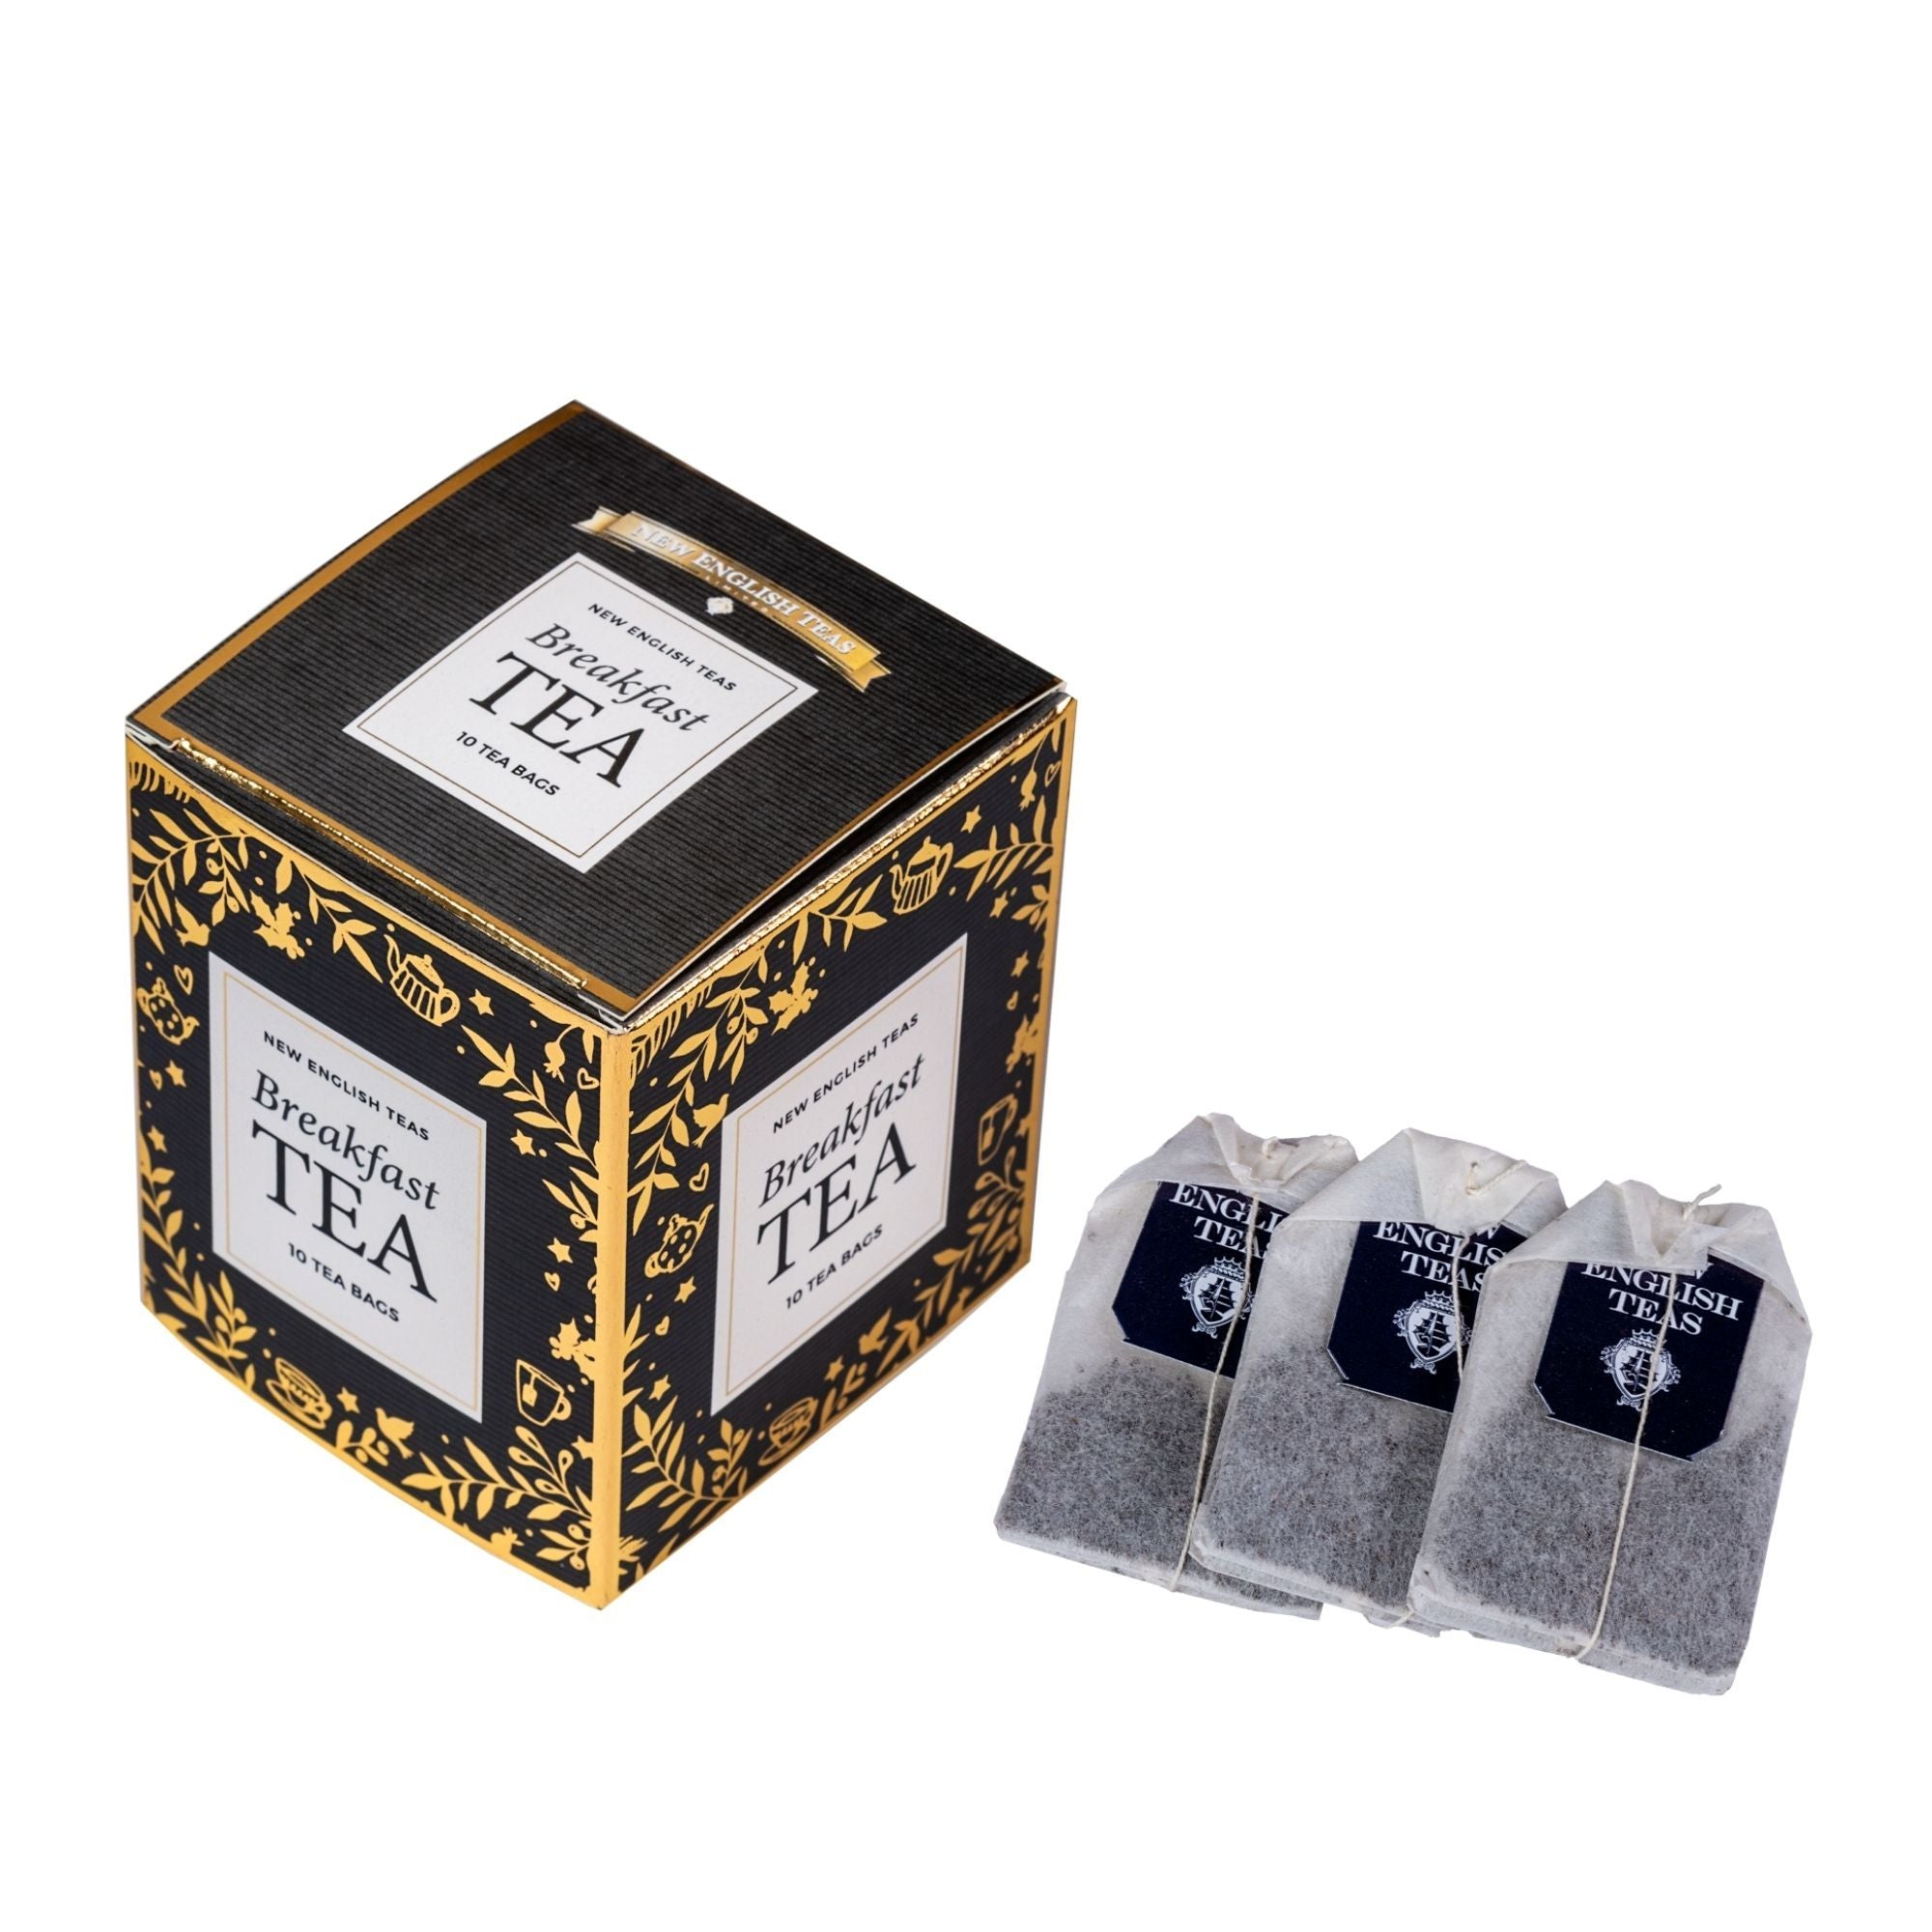 English Breakfast teabag gift box, 10 English Breakfast teabags Black Tea New English Teas 